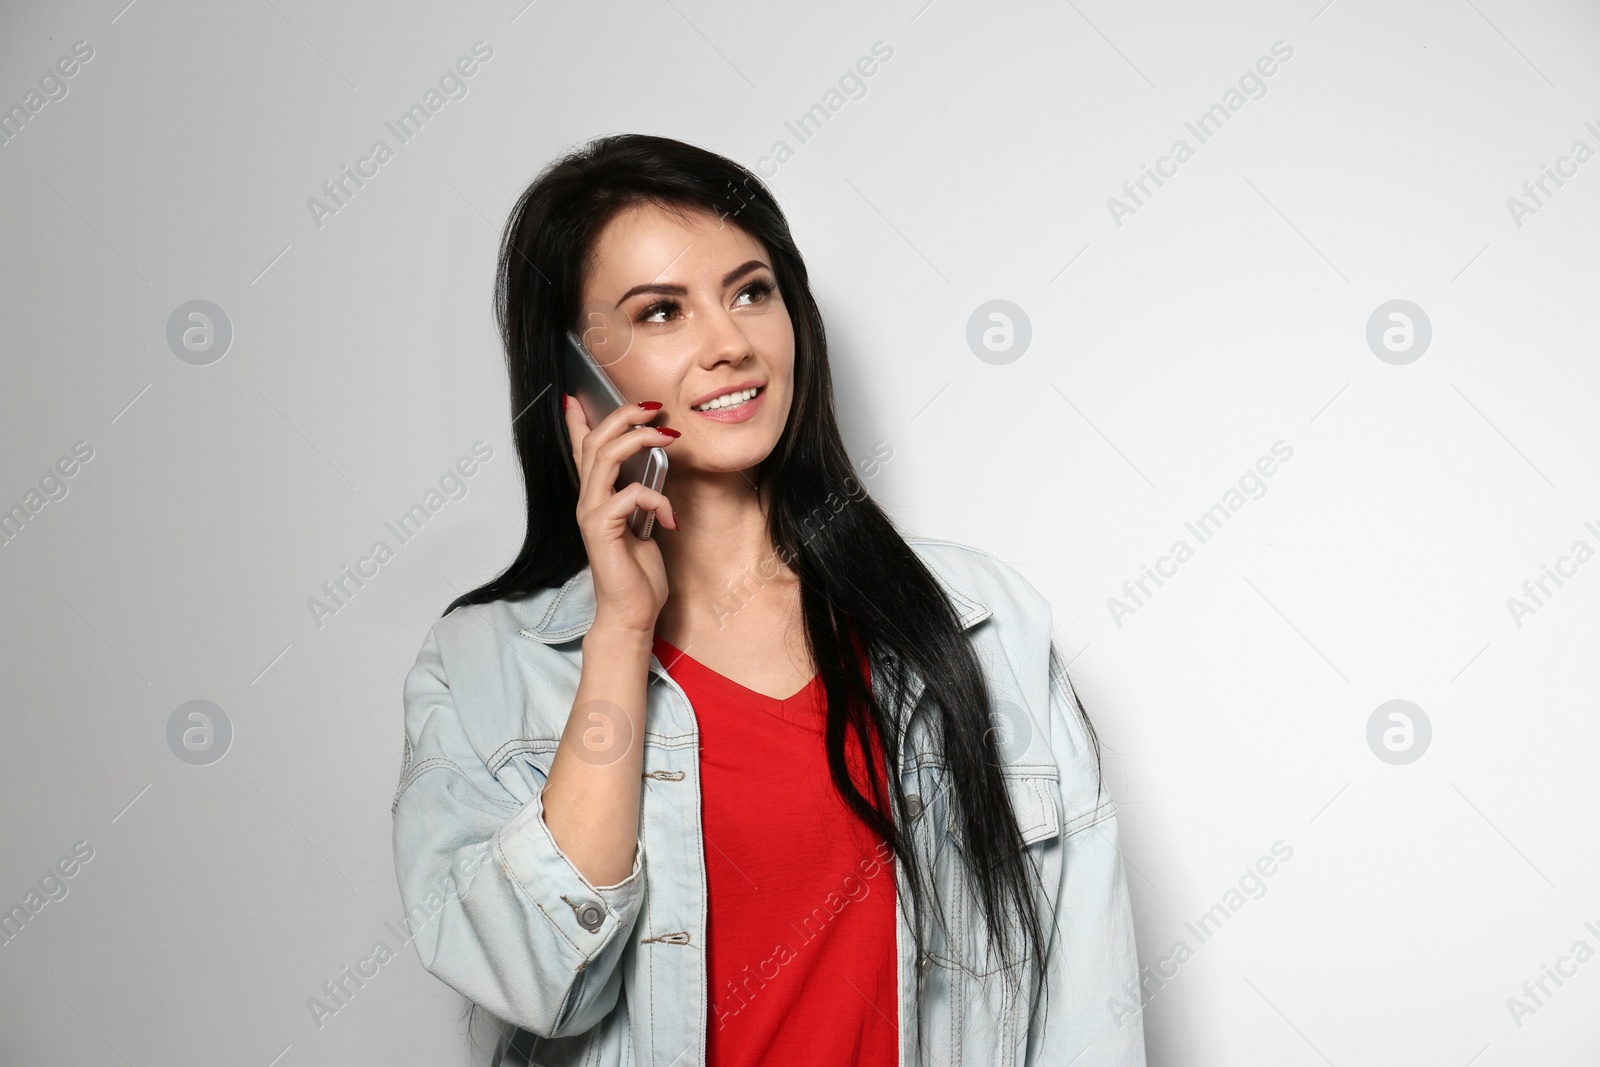 Photo of Portrait of stylish woman talking on phone against light background